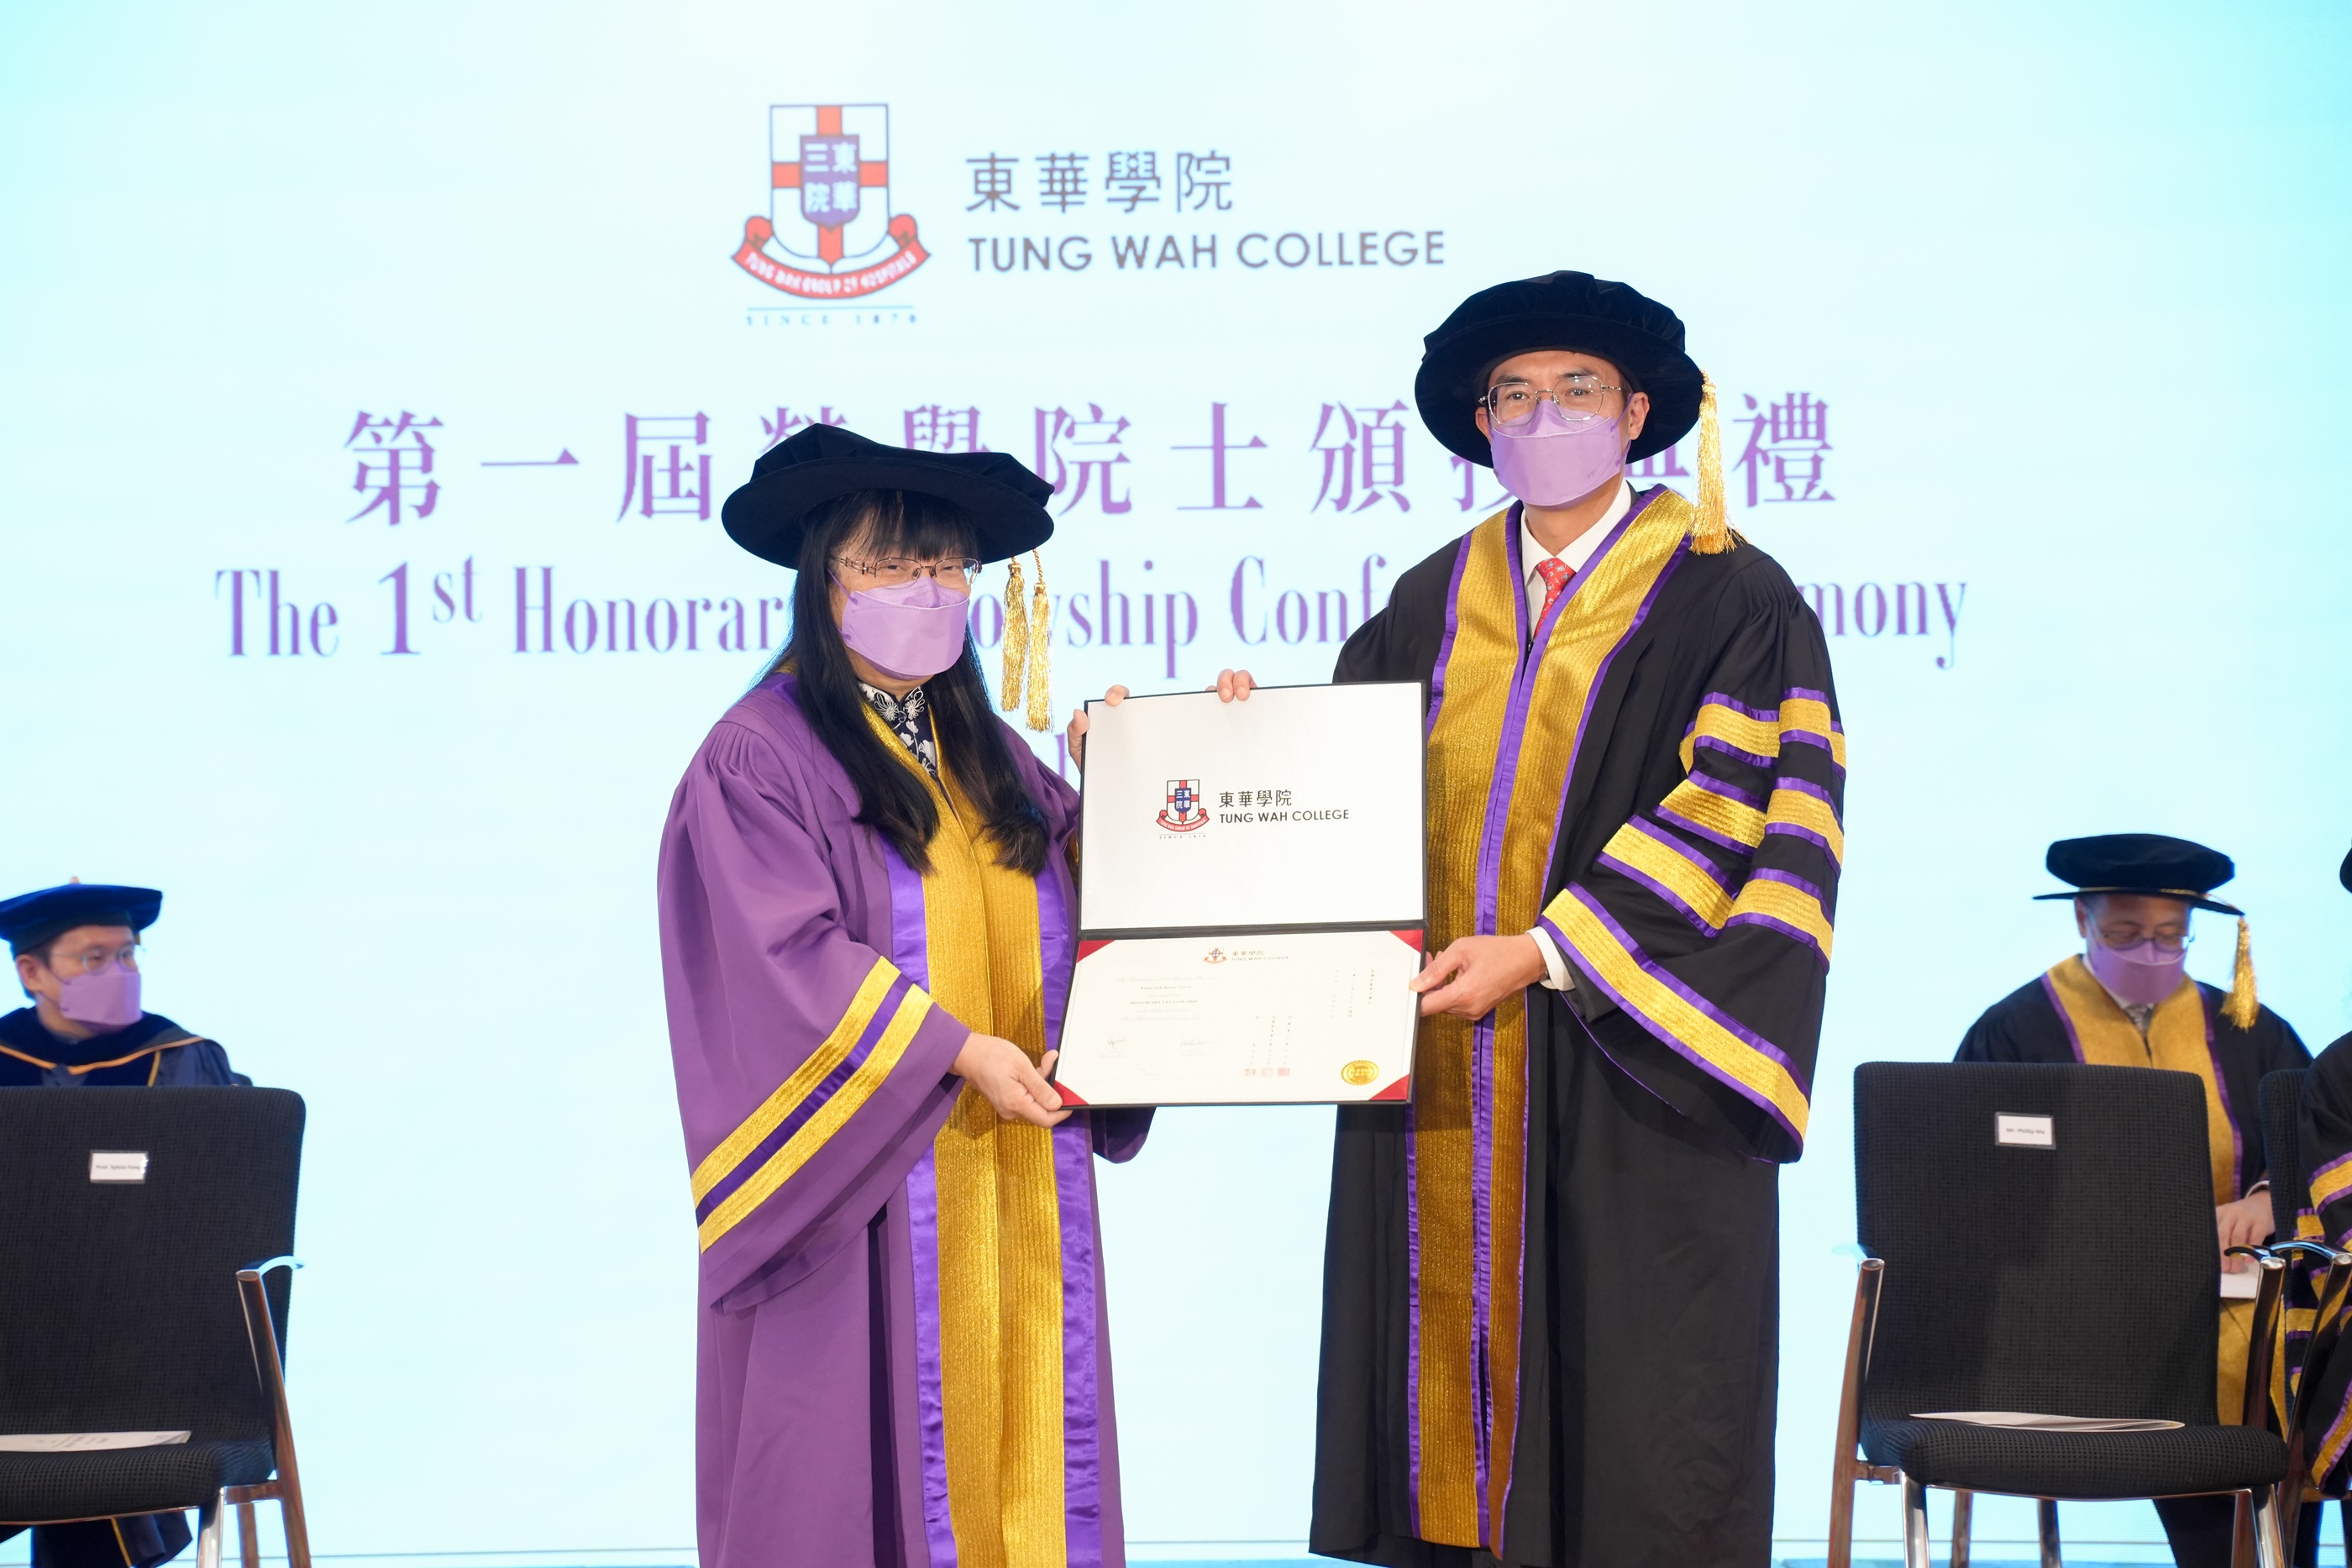 Professor Fung Yuk Kuen Sylvia (left) is conferred the Honorary Fellowship.